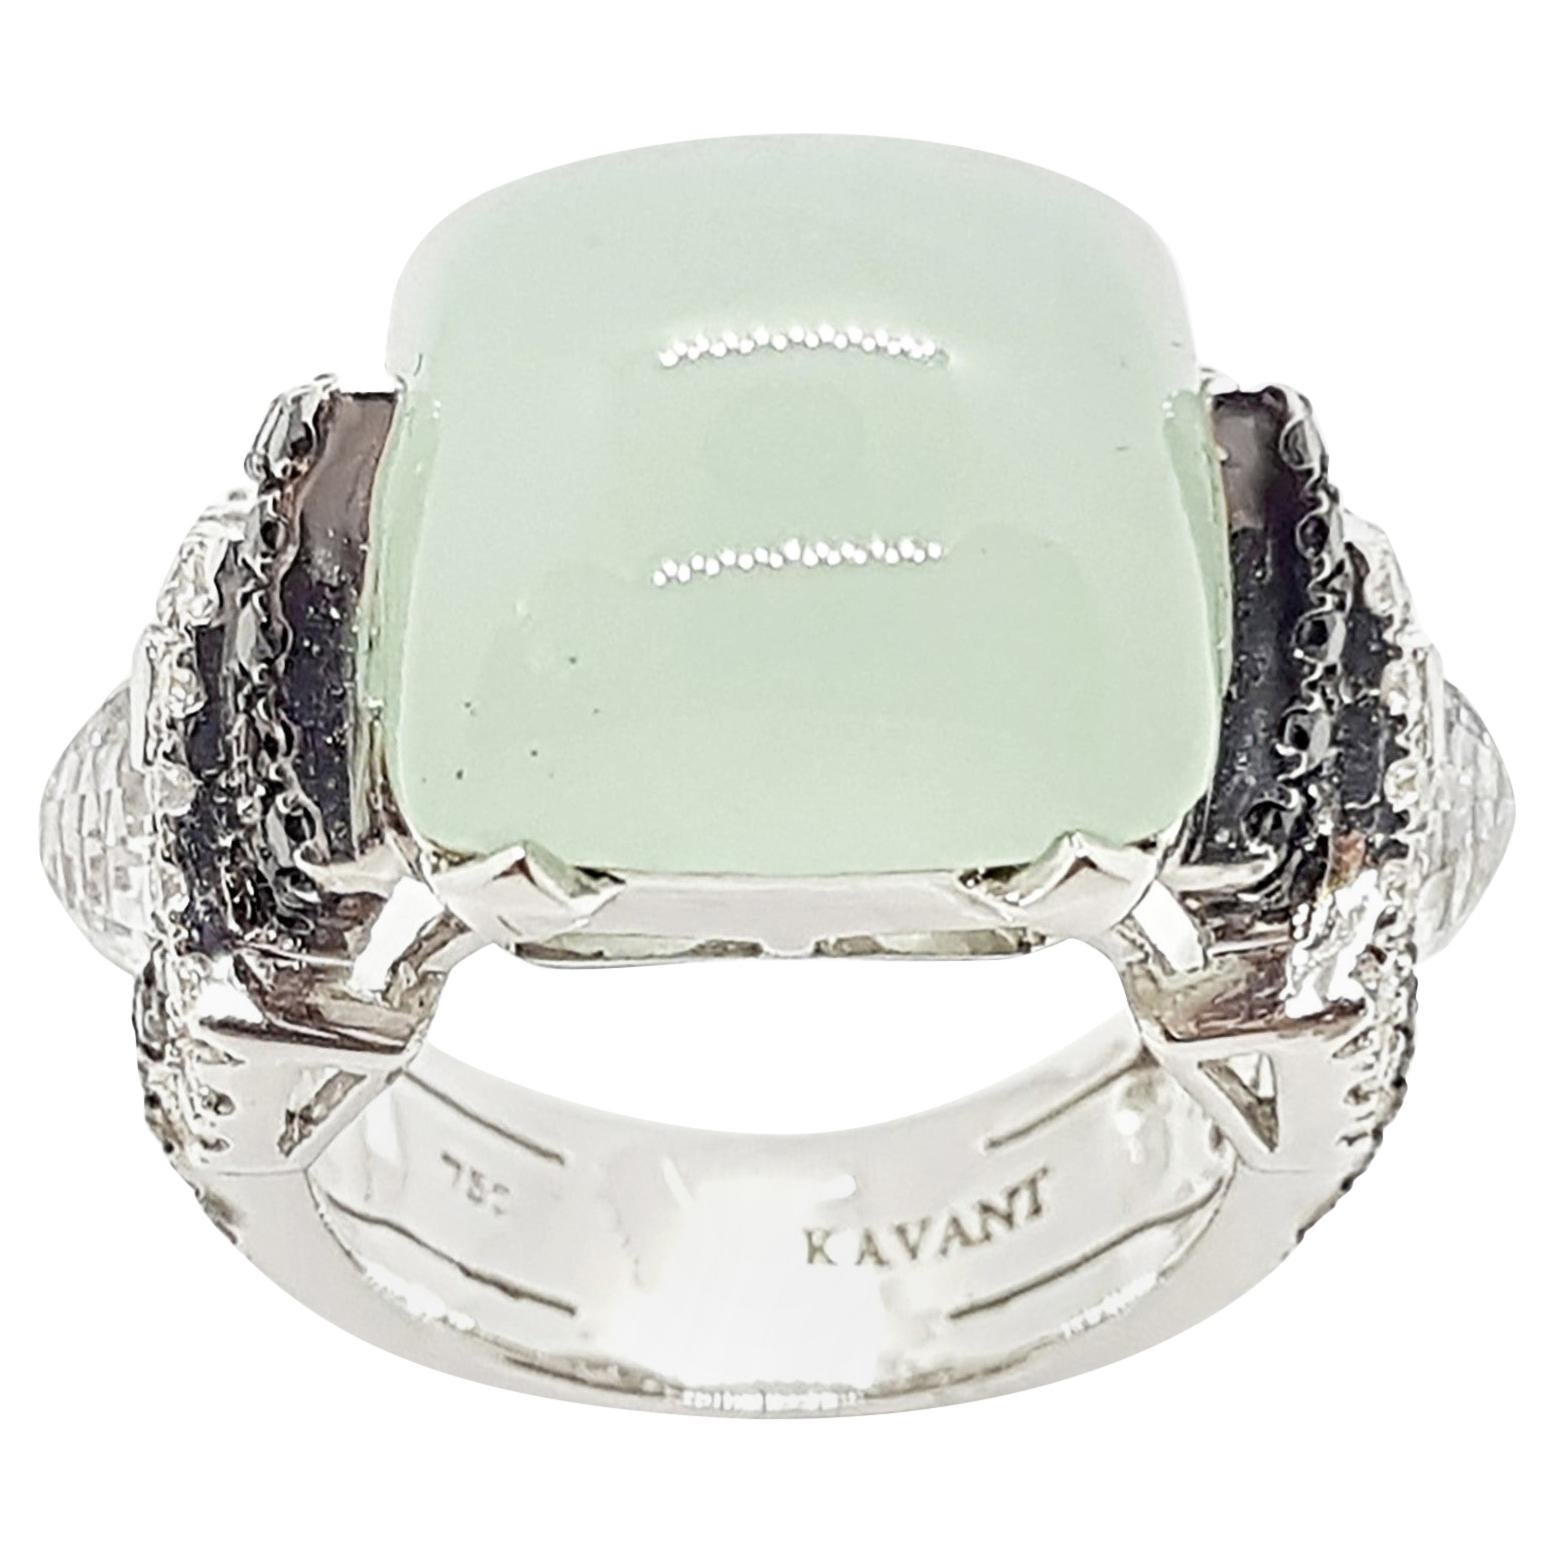 Aquamarine, White Sapphire, Black Diamond, Diamond Ring in 18 Karat White Gold